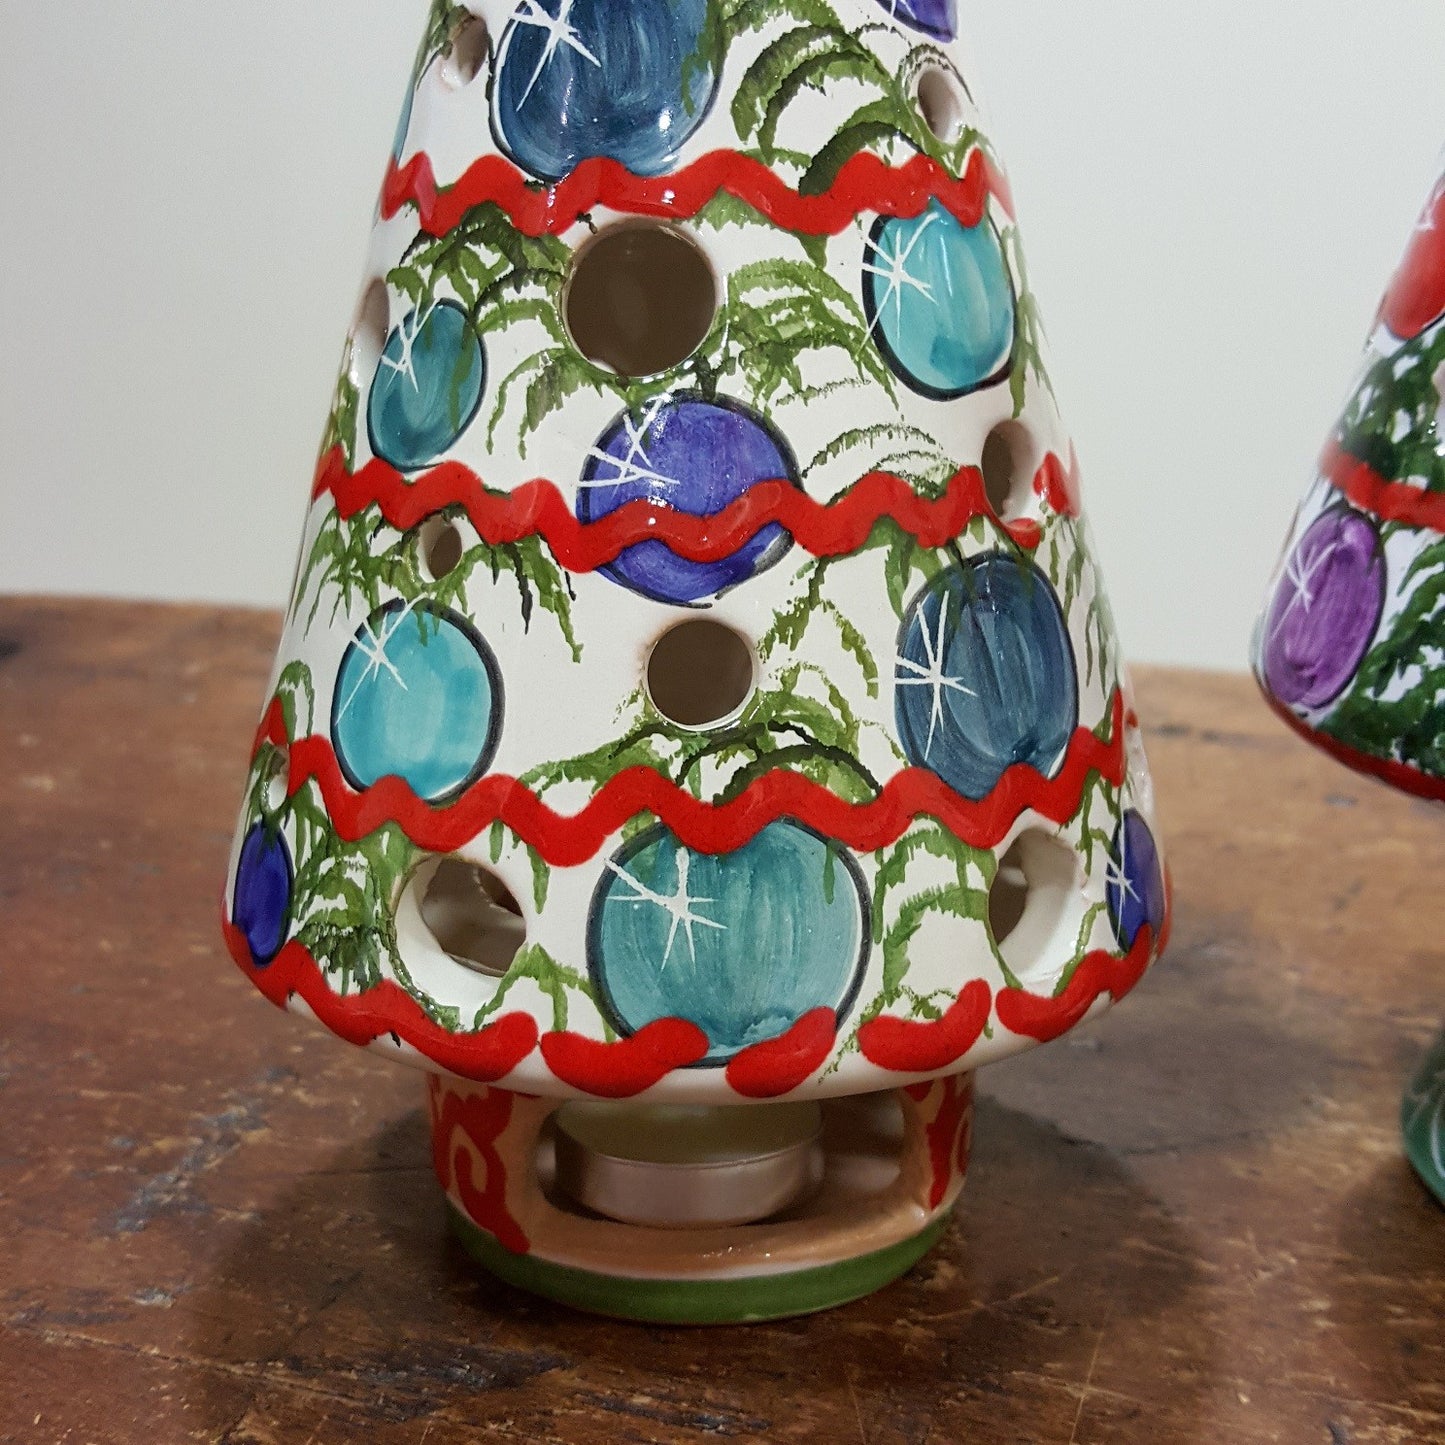 Multicolored ceramic Christmas tree